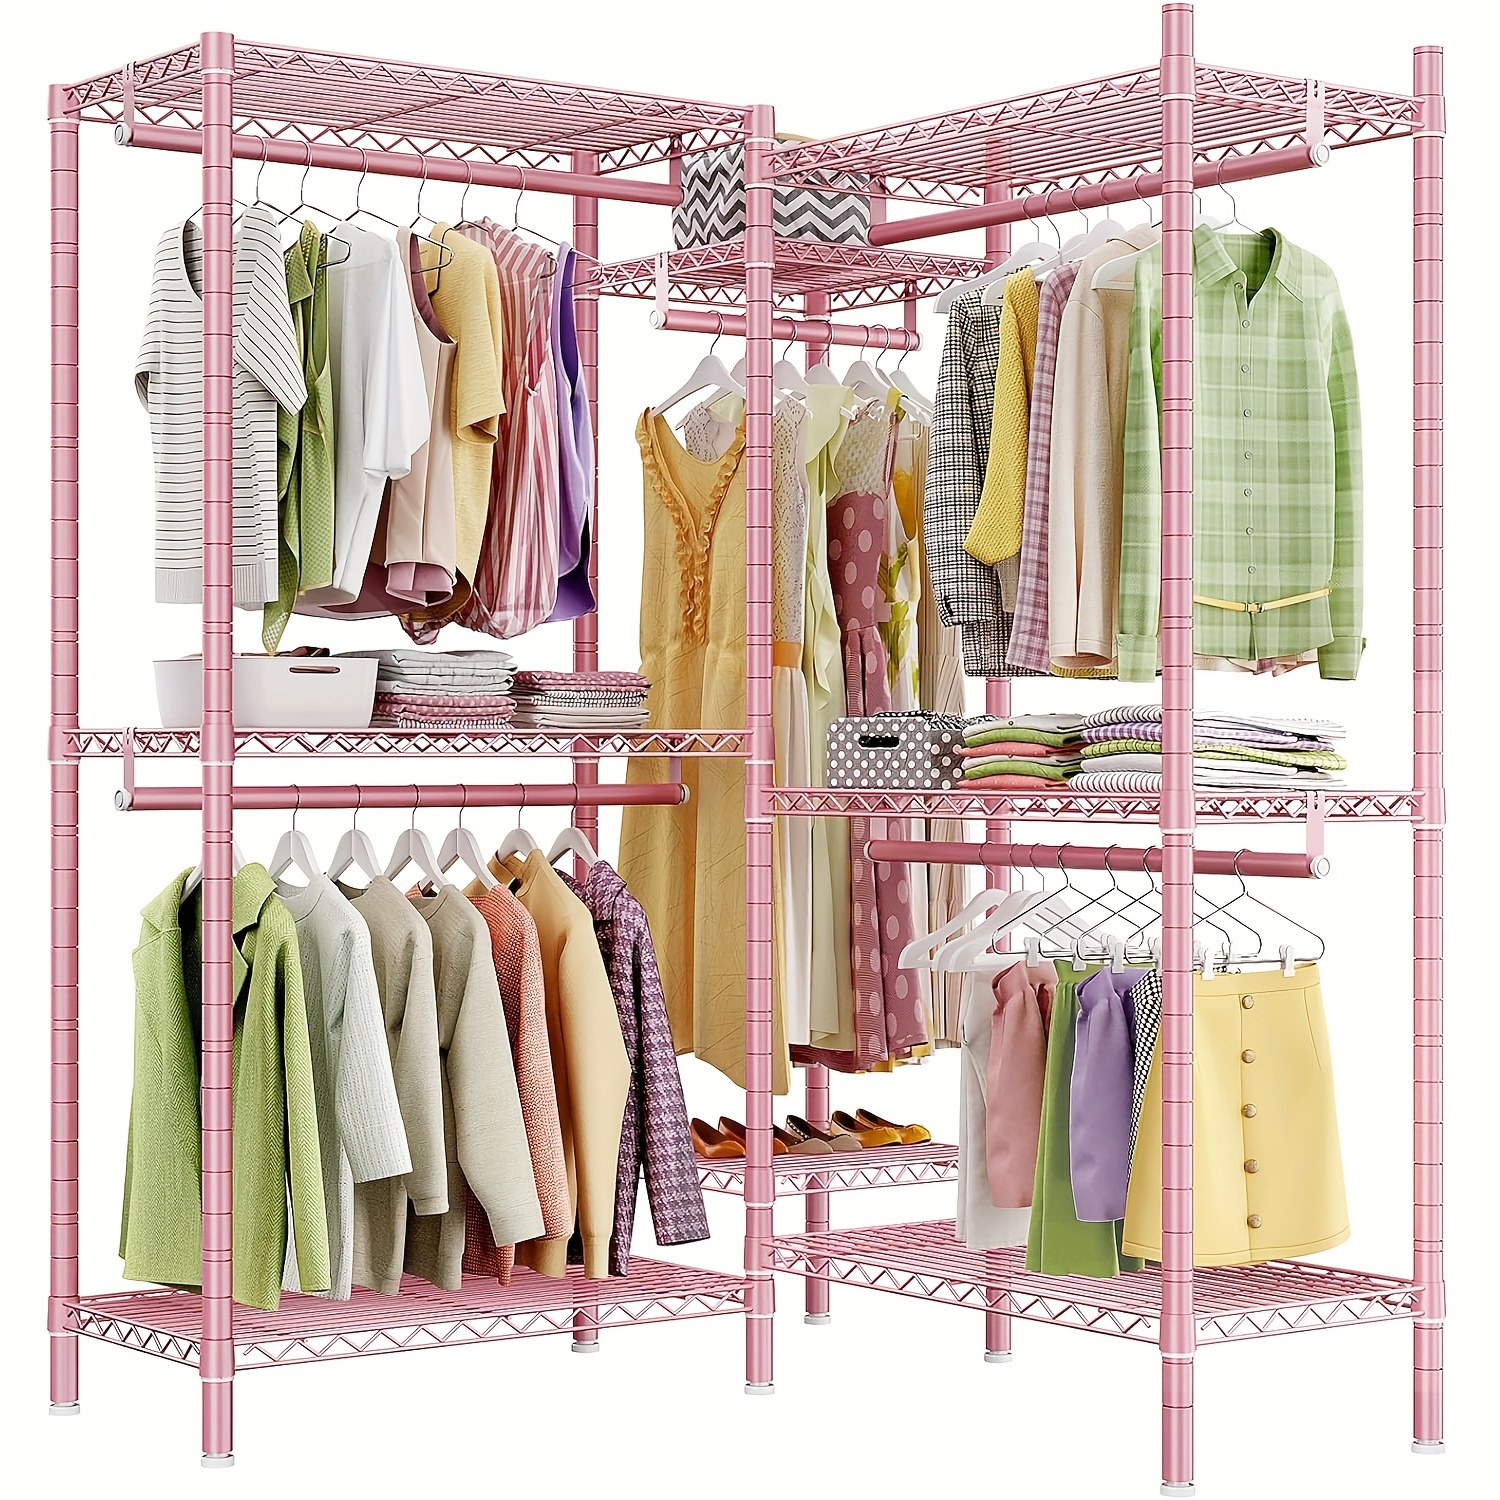 

Heavy Duty Clothes Rack, 825lbs L Shape Metal Clothes Racks For Hanging Clothes, Clothing Racks For Hanging Clothes, Diy Portable Clothes Rack, Wide Garment Rack 74.5" W X 18" D X 77" H, Pink